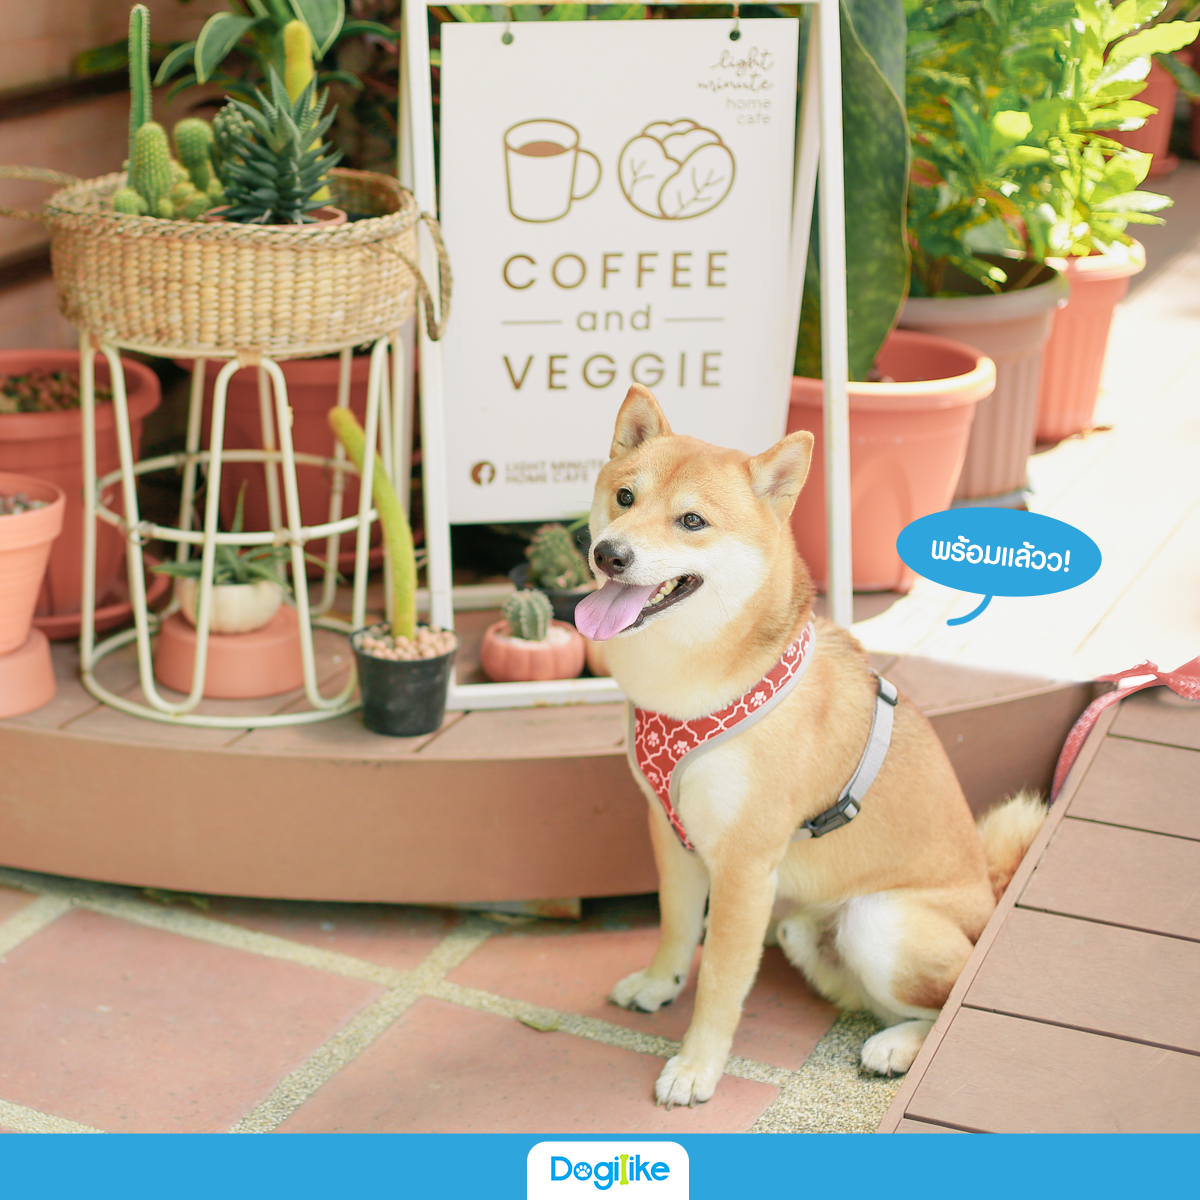 Dogilike.com :: Light Minute Home Cafe ╓рЮ©Х©уе╢у карАагЮ╒ИрД╢И!